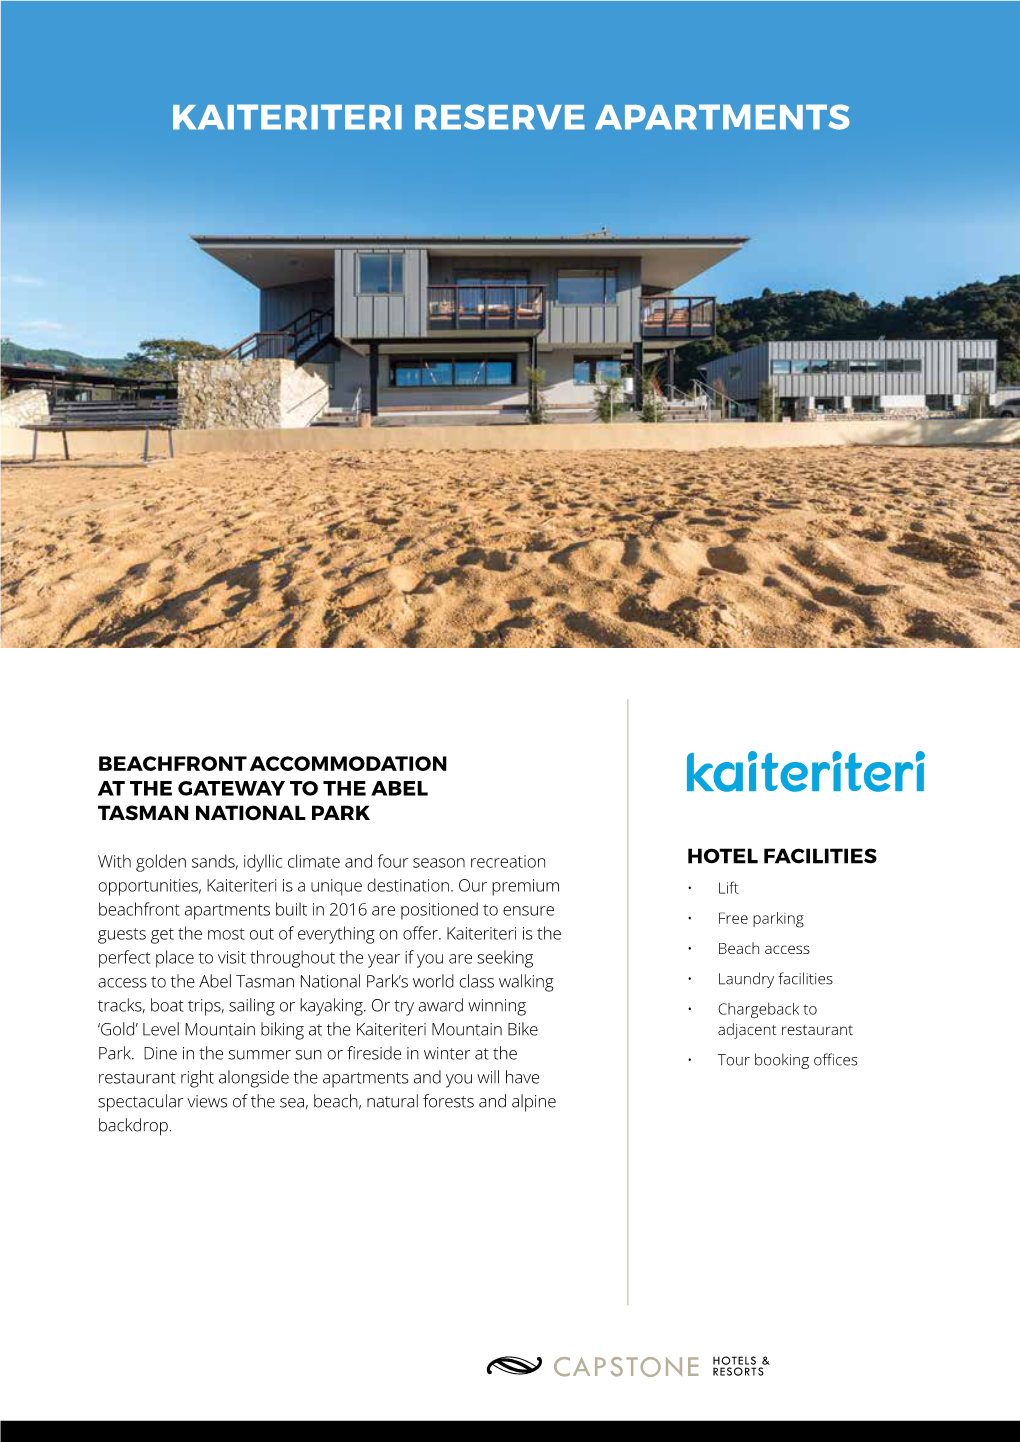 Kaiteriteri Reserve Apartments